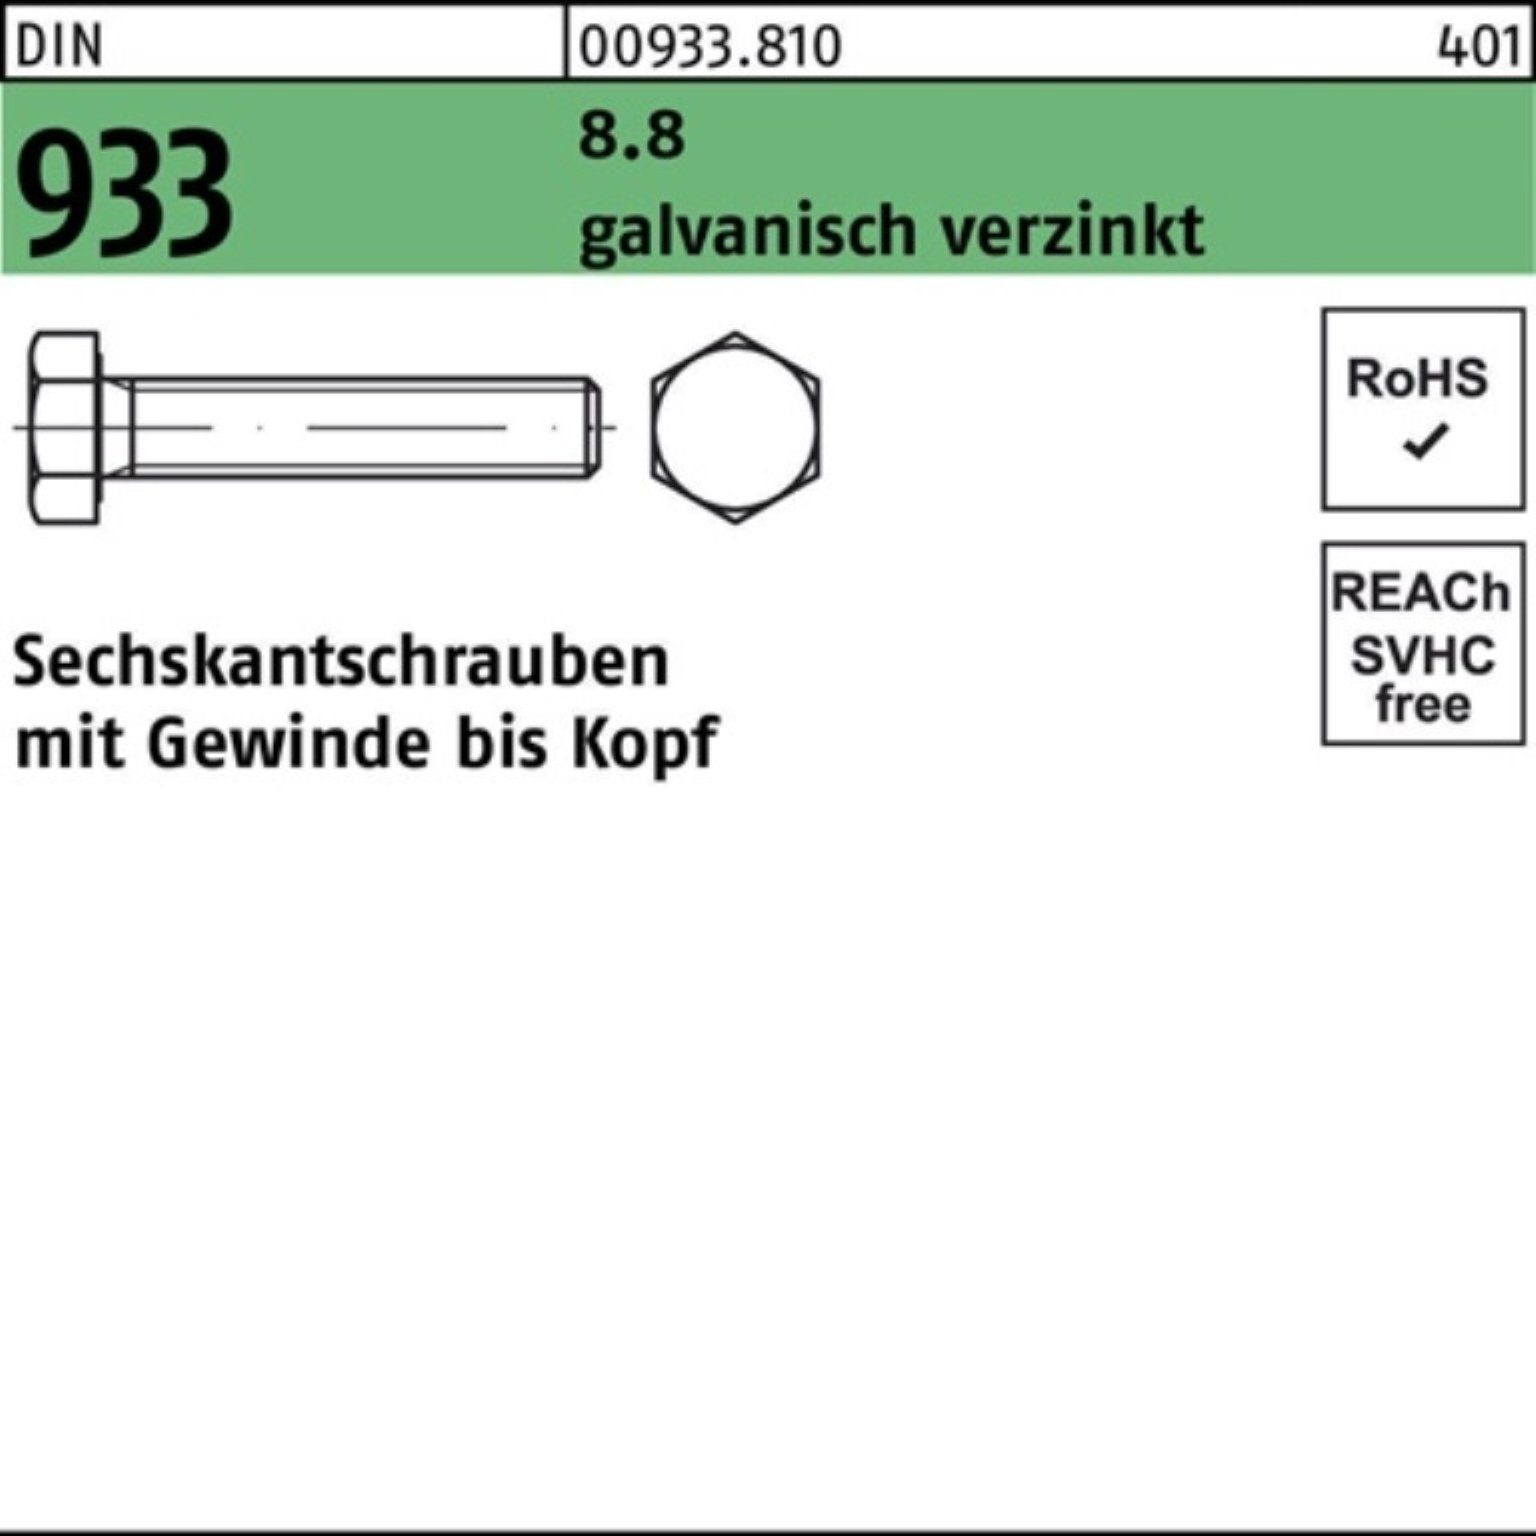 Sechskantschraube VG 933 Reyher 8.8 Stü 100 galv.verz. Sechskantschraube Pack 1 M39x 100er DIN